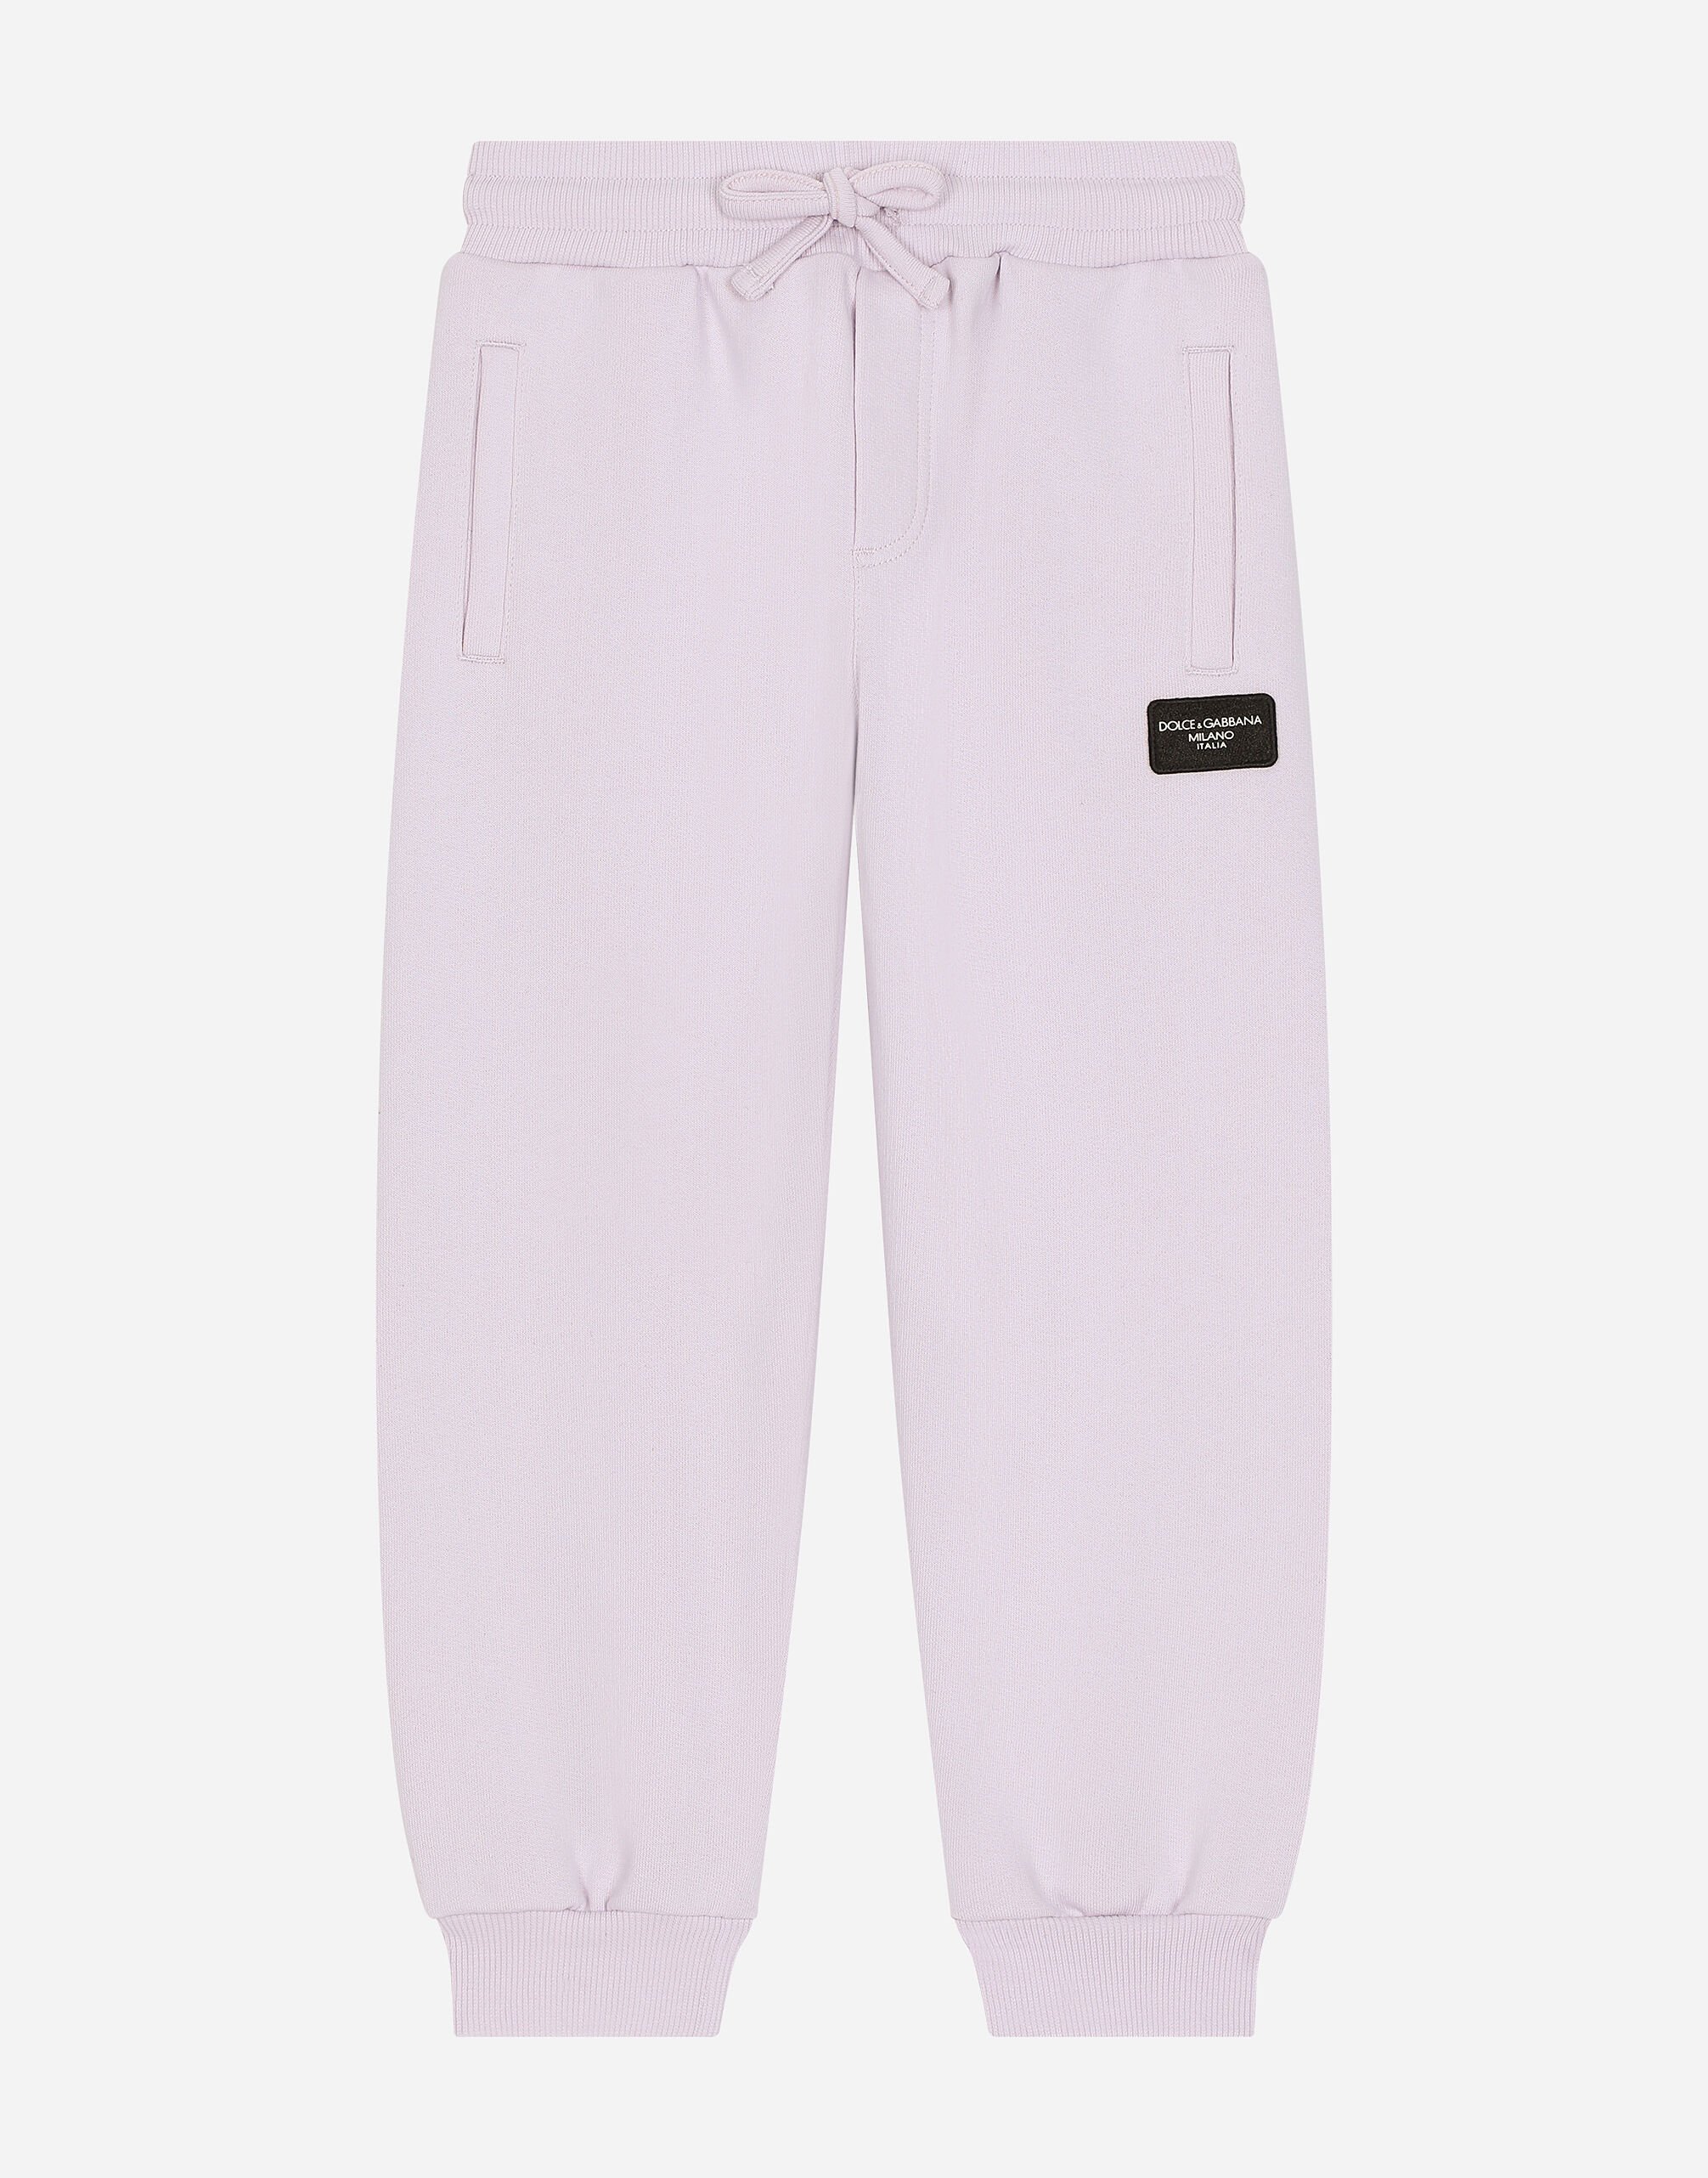 Dolce & Gabbana Jersey jogging pants with logo tag Print L55I27FI5JU